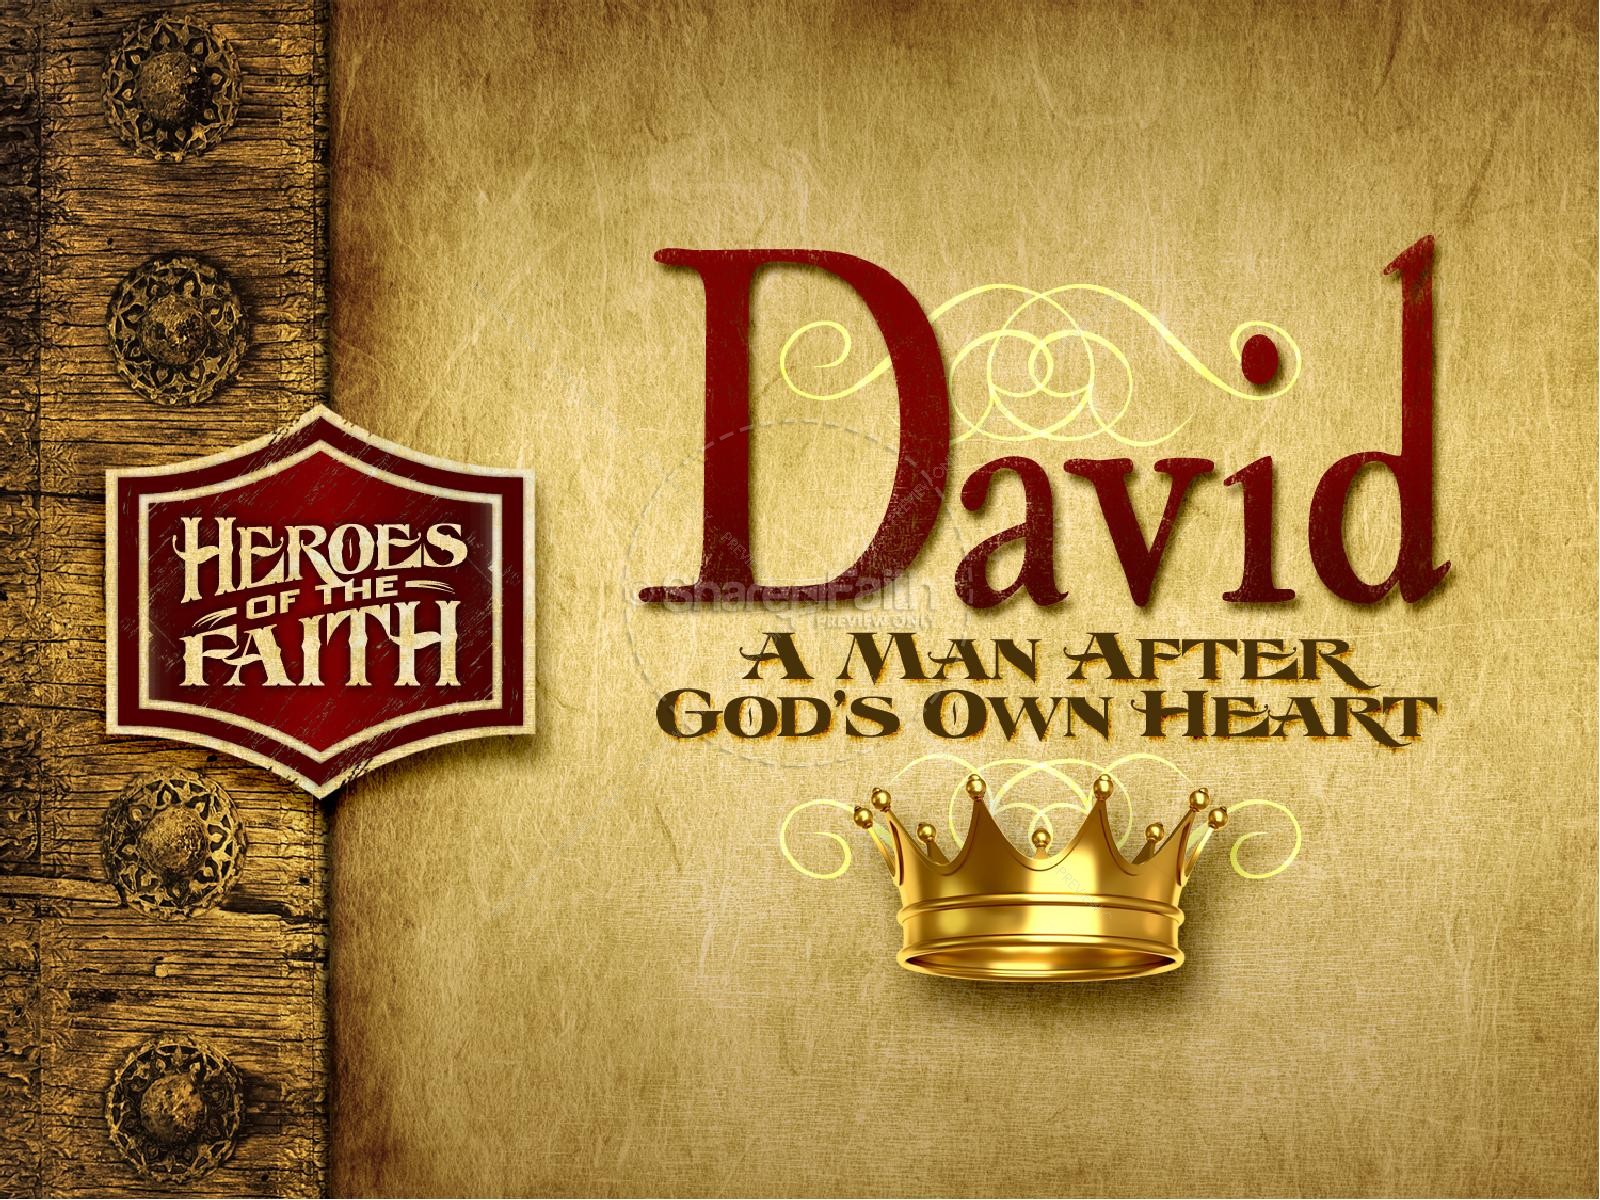 King David PowerPoint Template Thumbnail 1